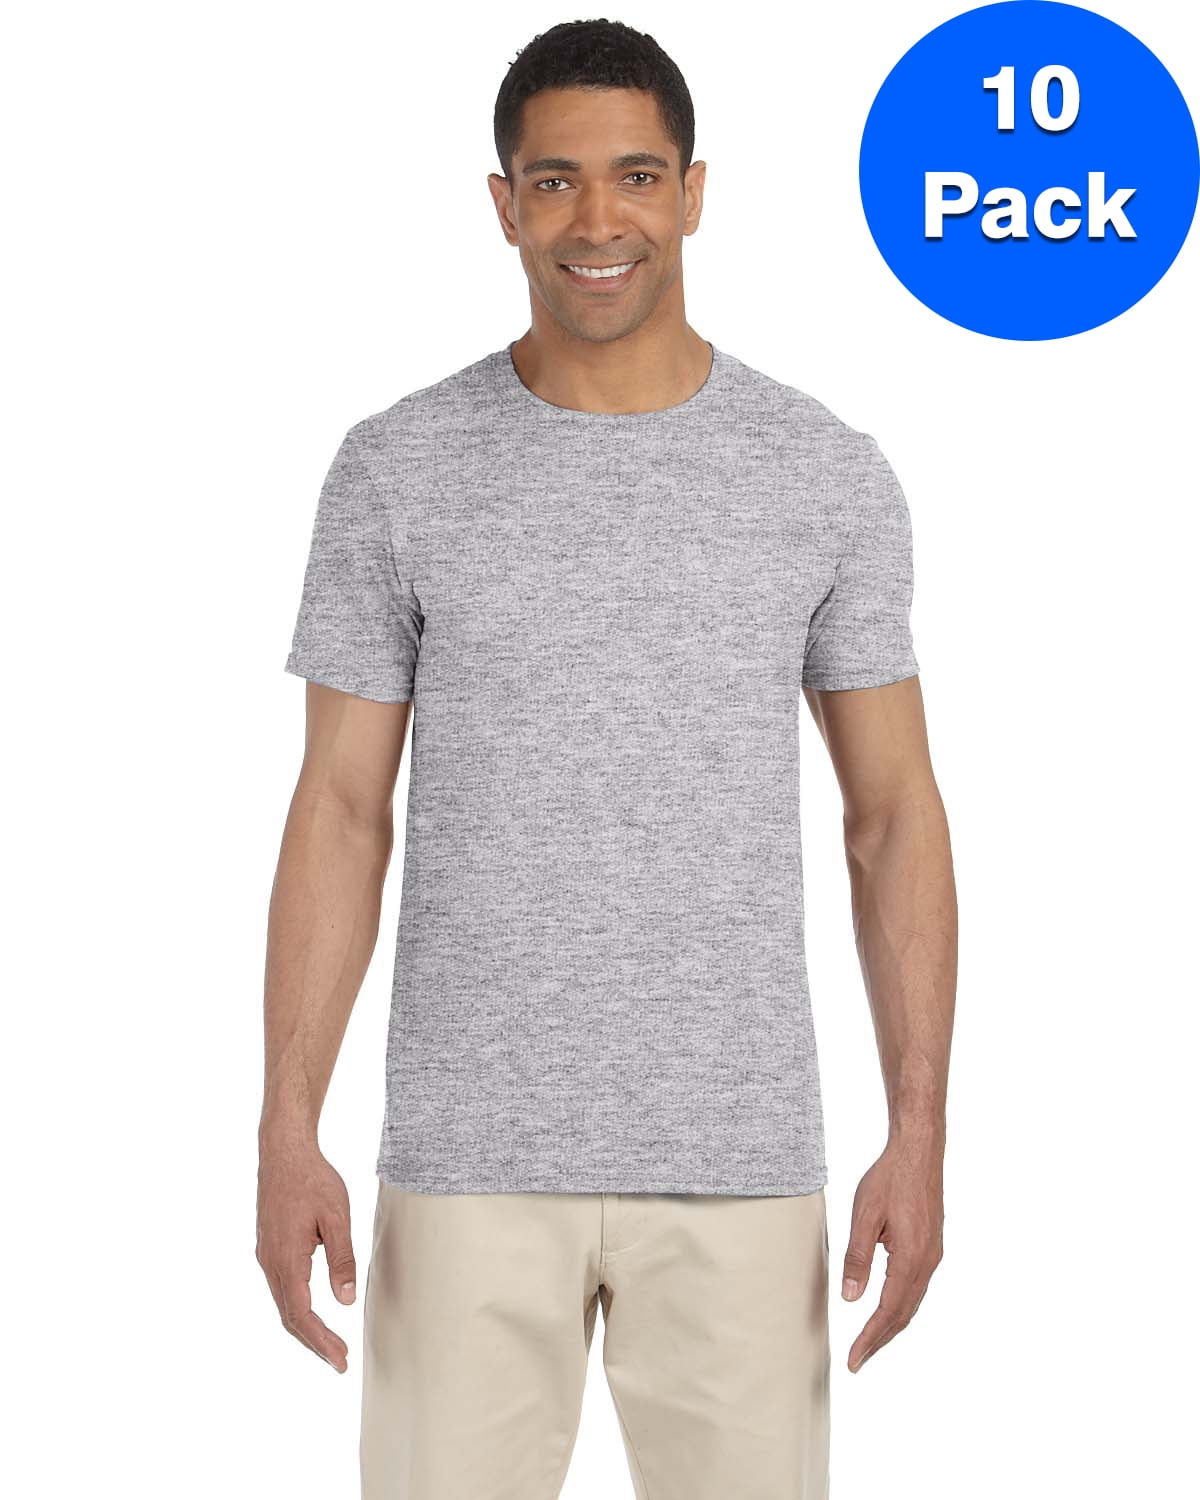 Mens 4.5 oz. SoftStyle T-Shirt 10 Pack - Walmart.com